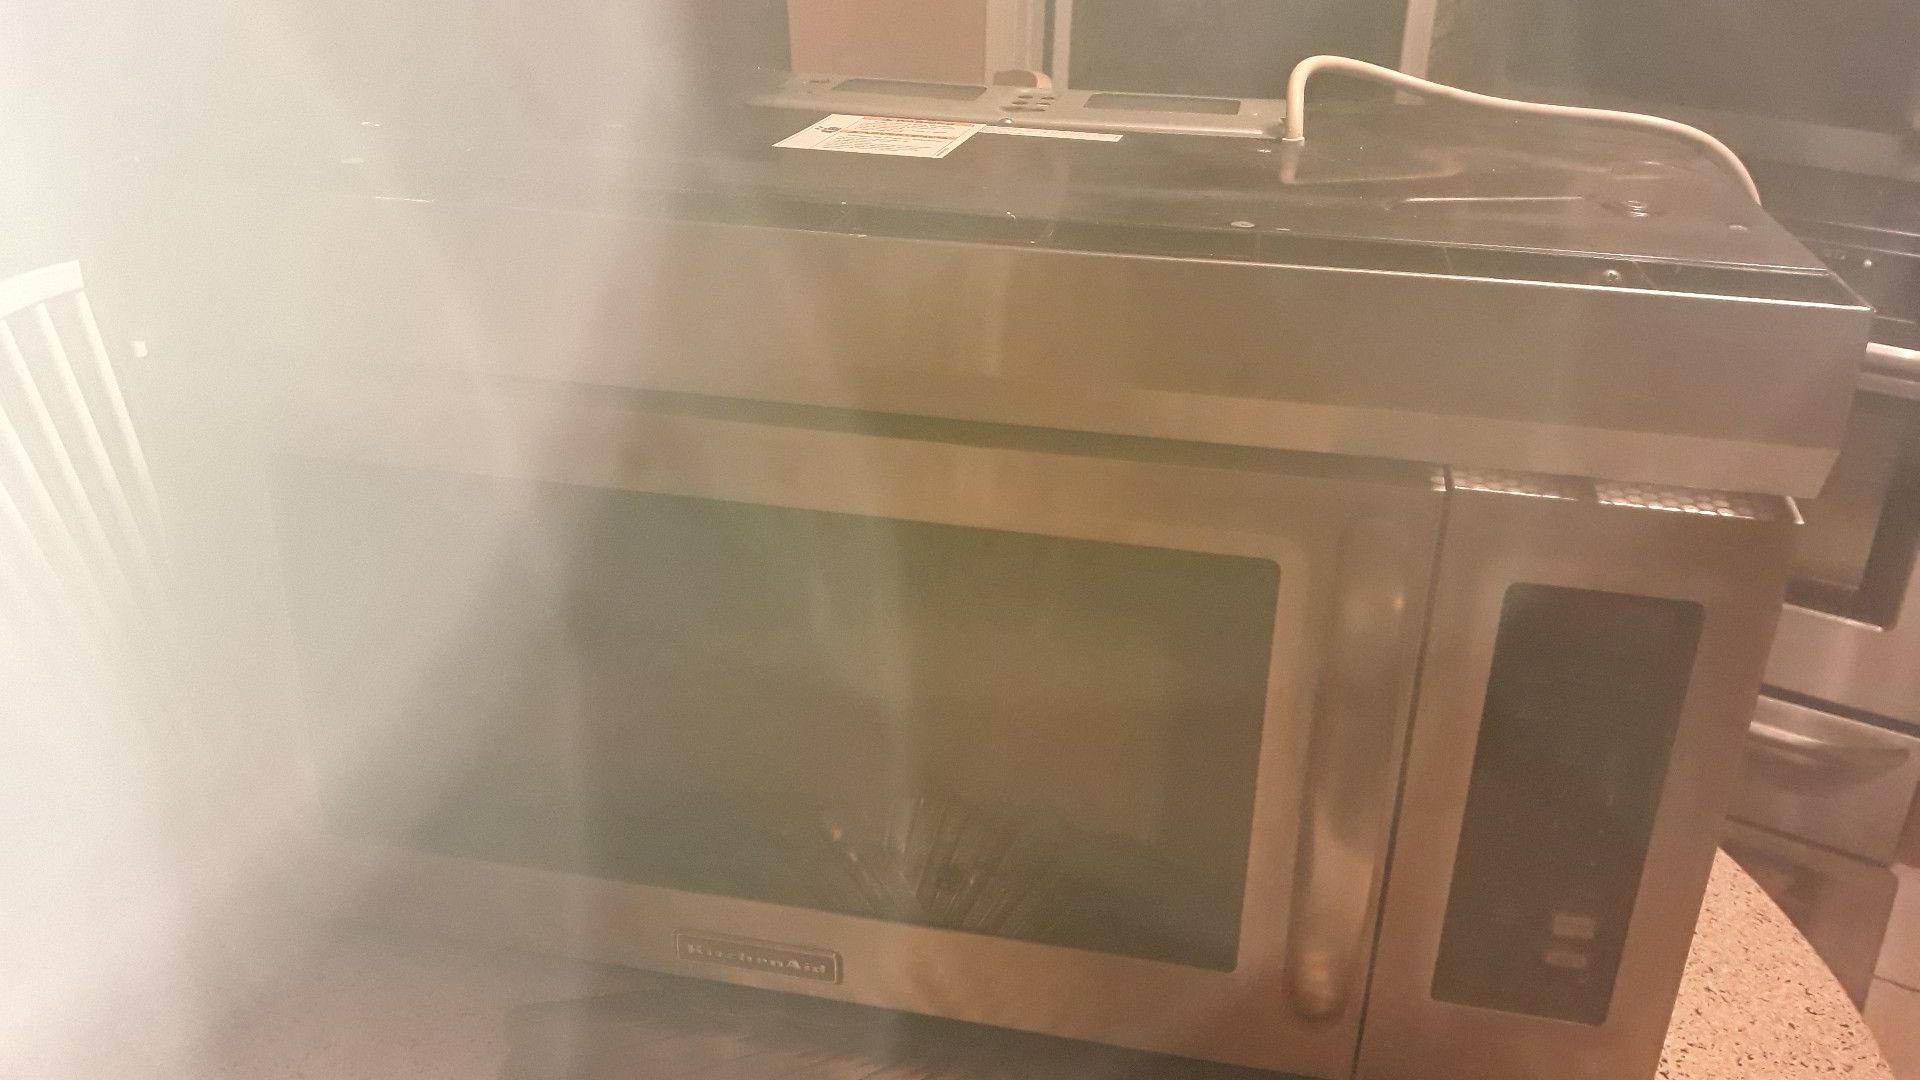 Kitchen Aid microwave